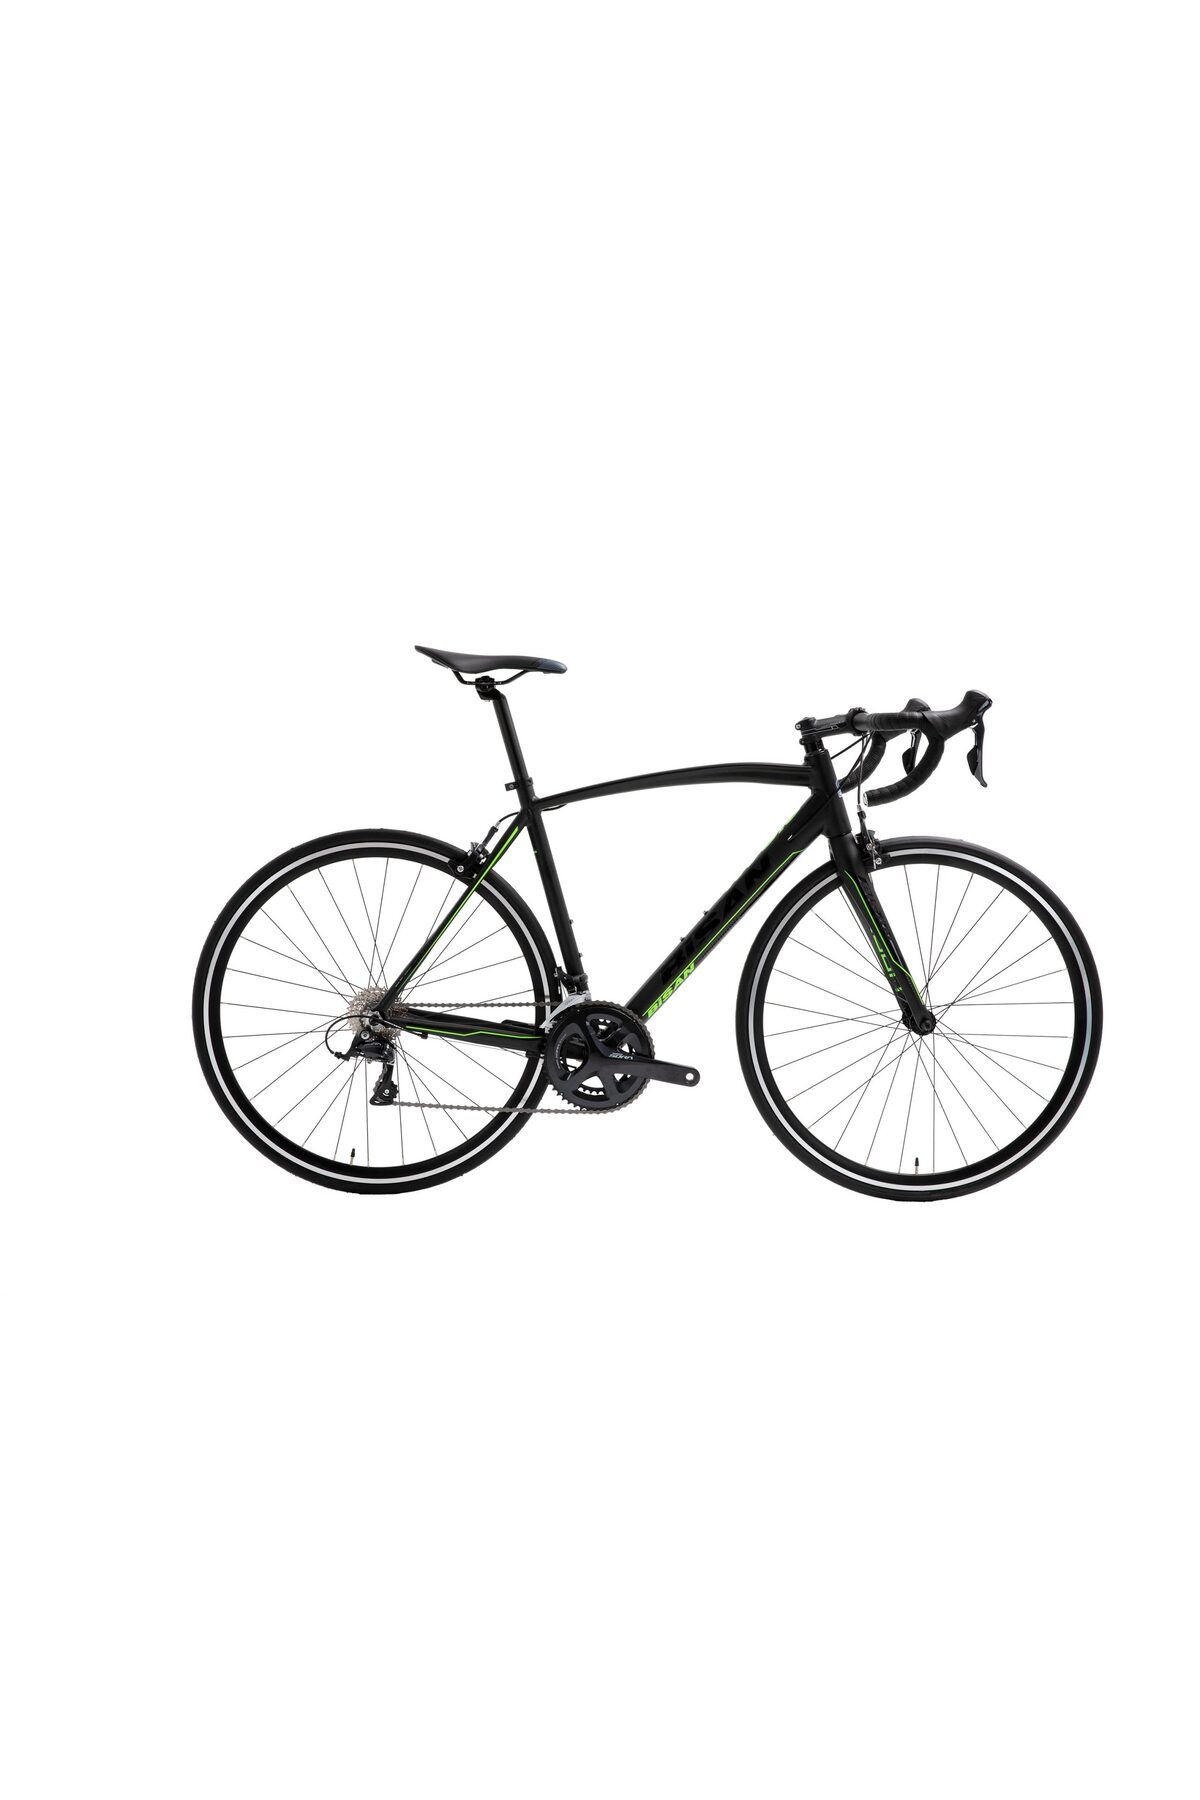 Bisan Rx 9300 Parlak Siyah/yeşil 50cm 700c 18 Vites Yarış / Yol Bisikleti